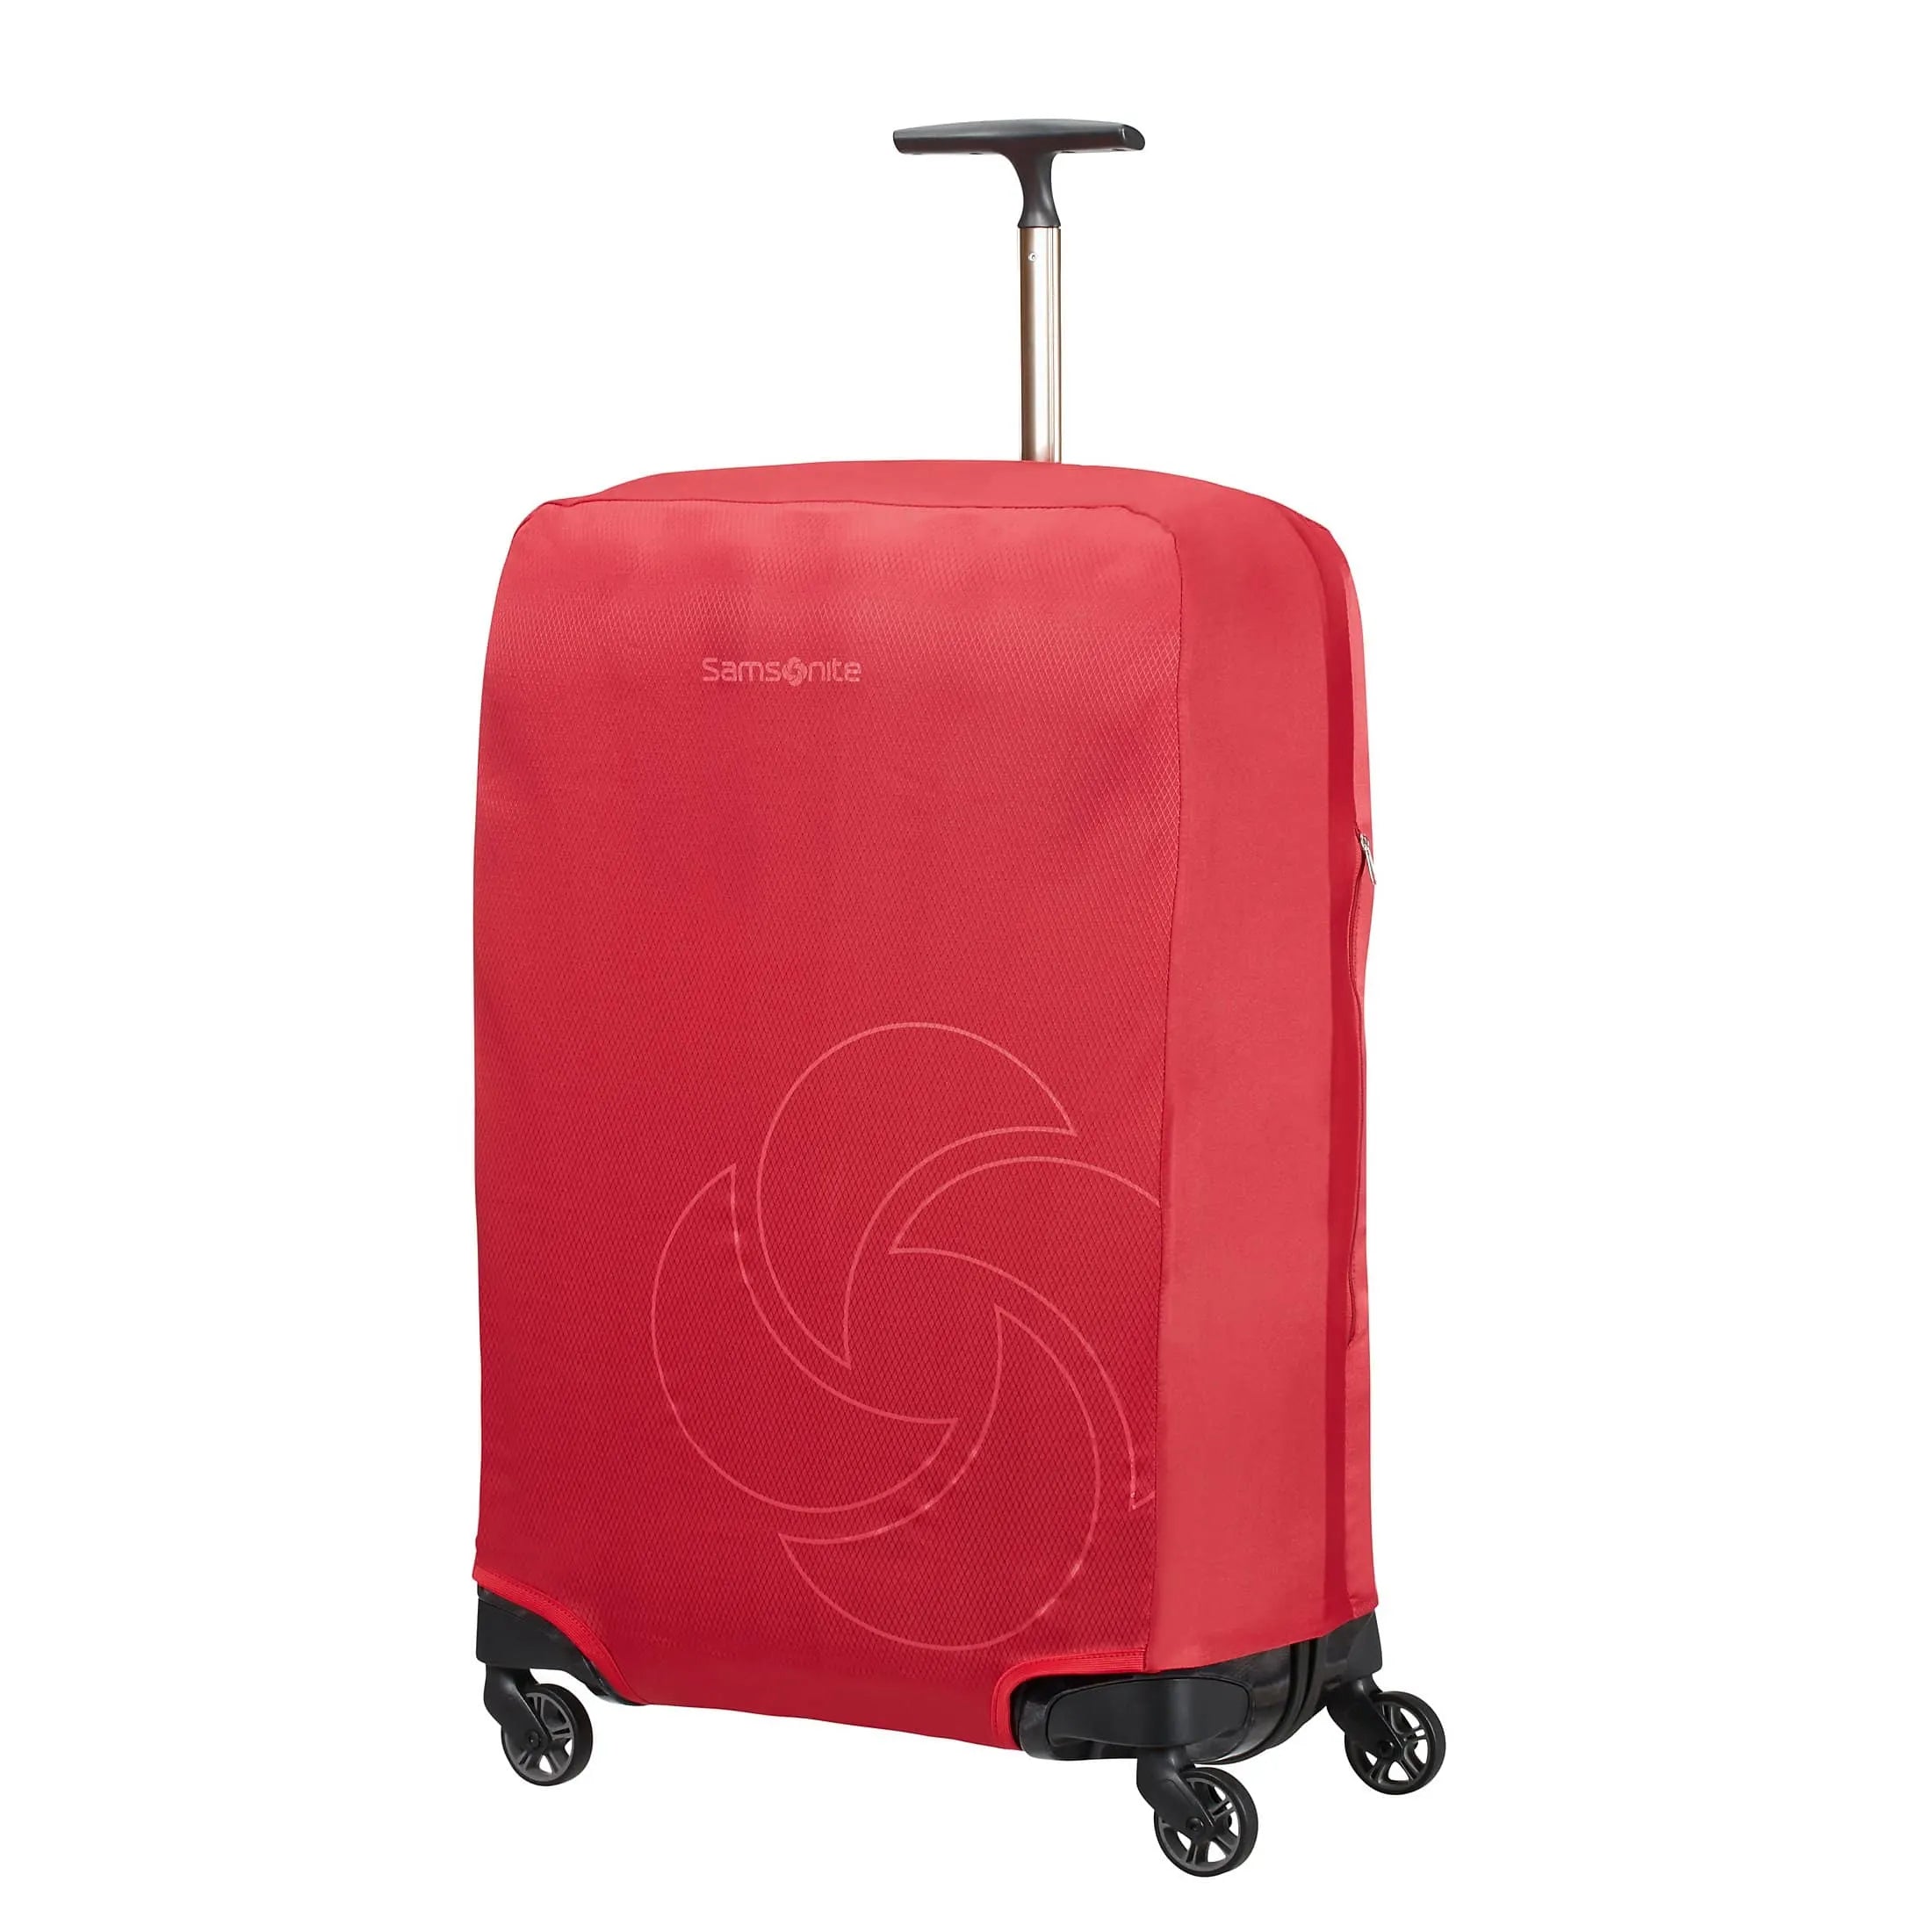 Samsonite Travel Accessories housse de valise M 69 cm - noir